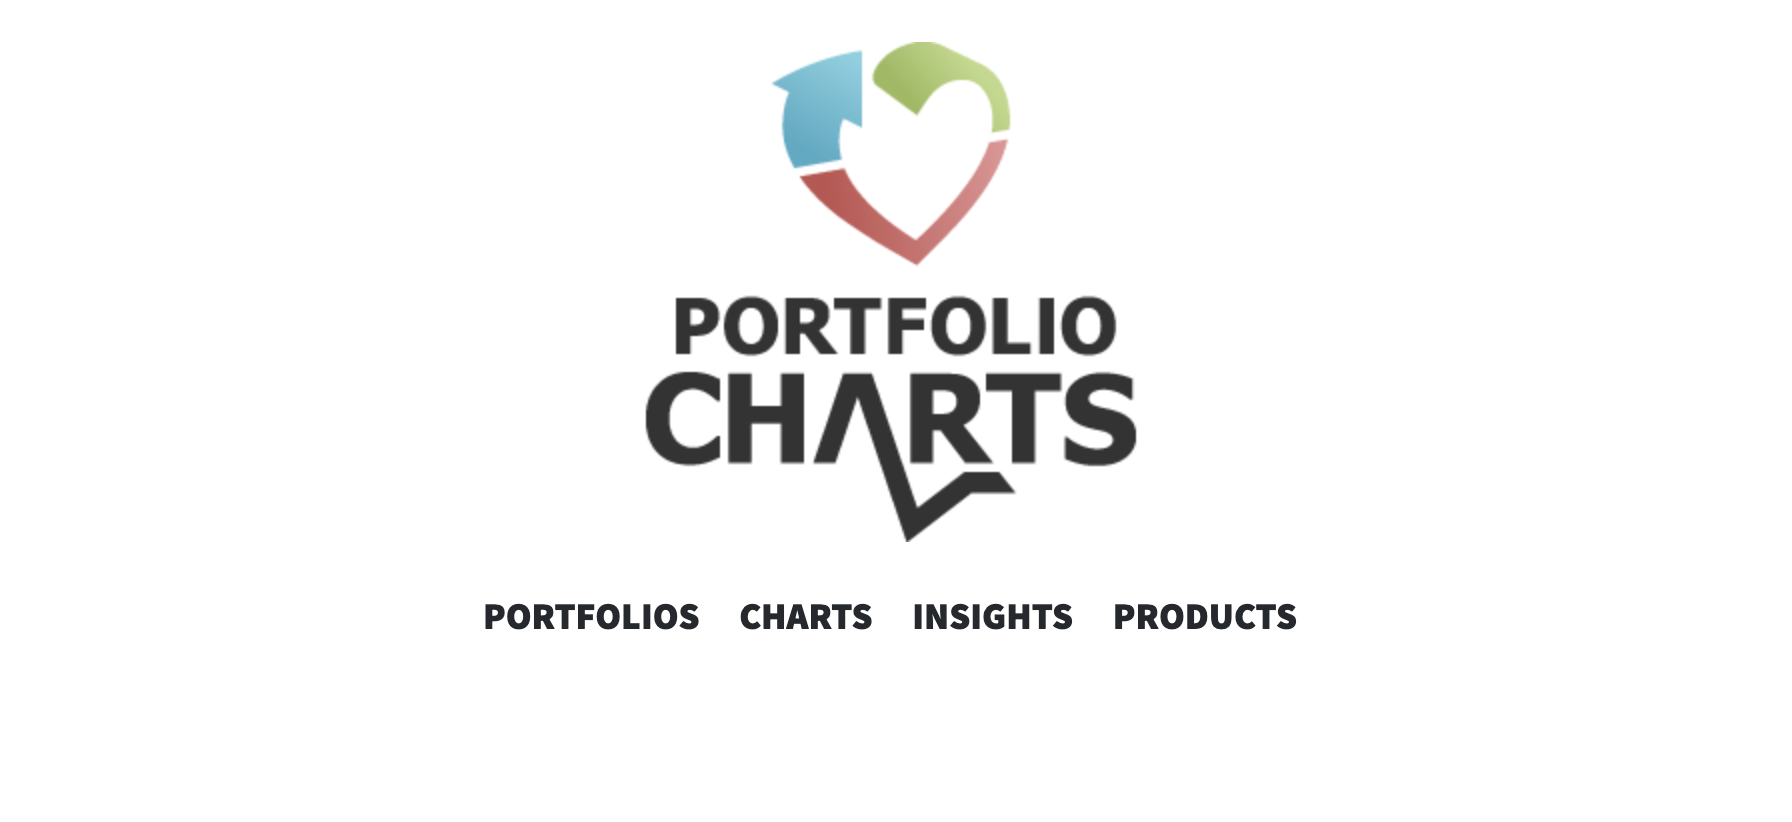 Portfolio Charts Home Page 